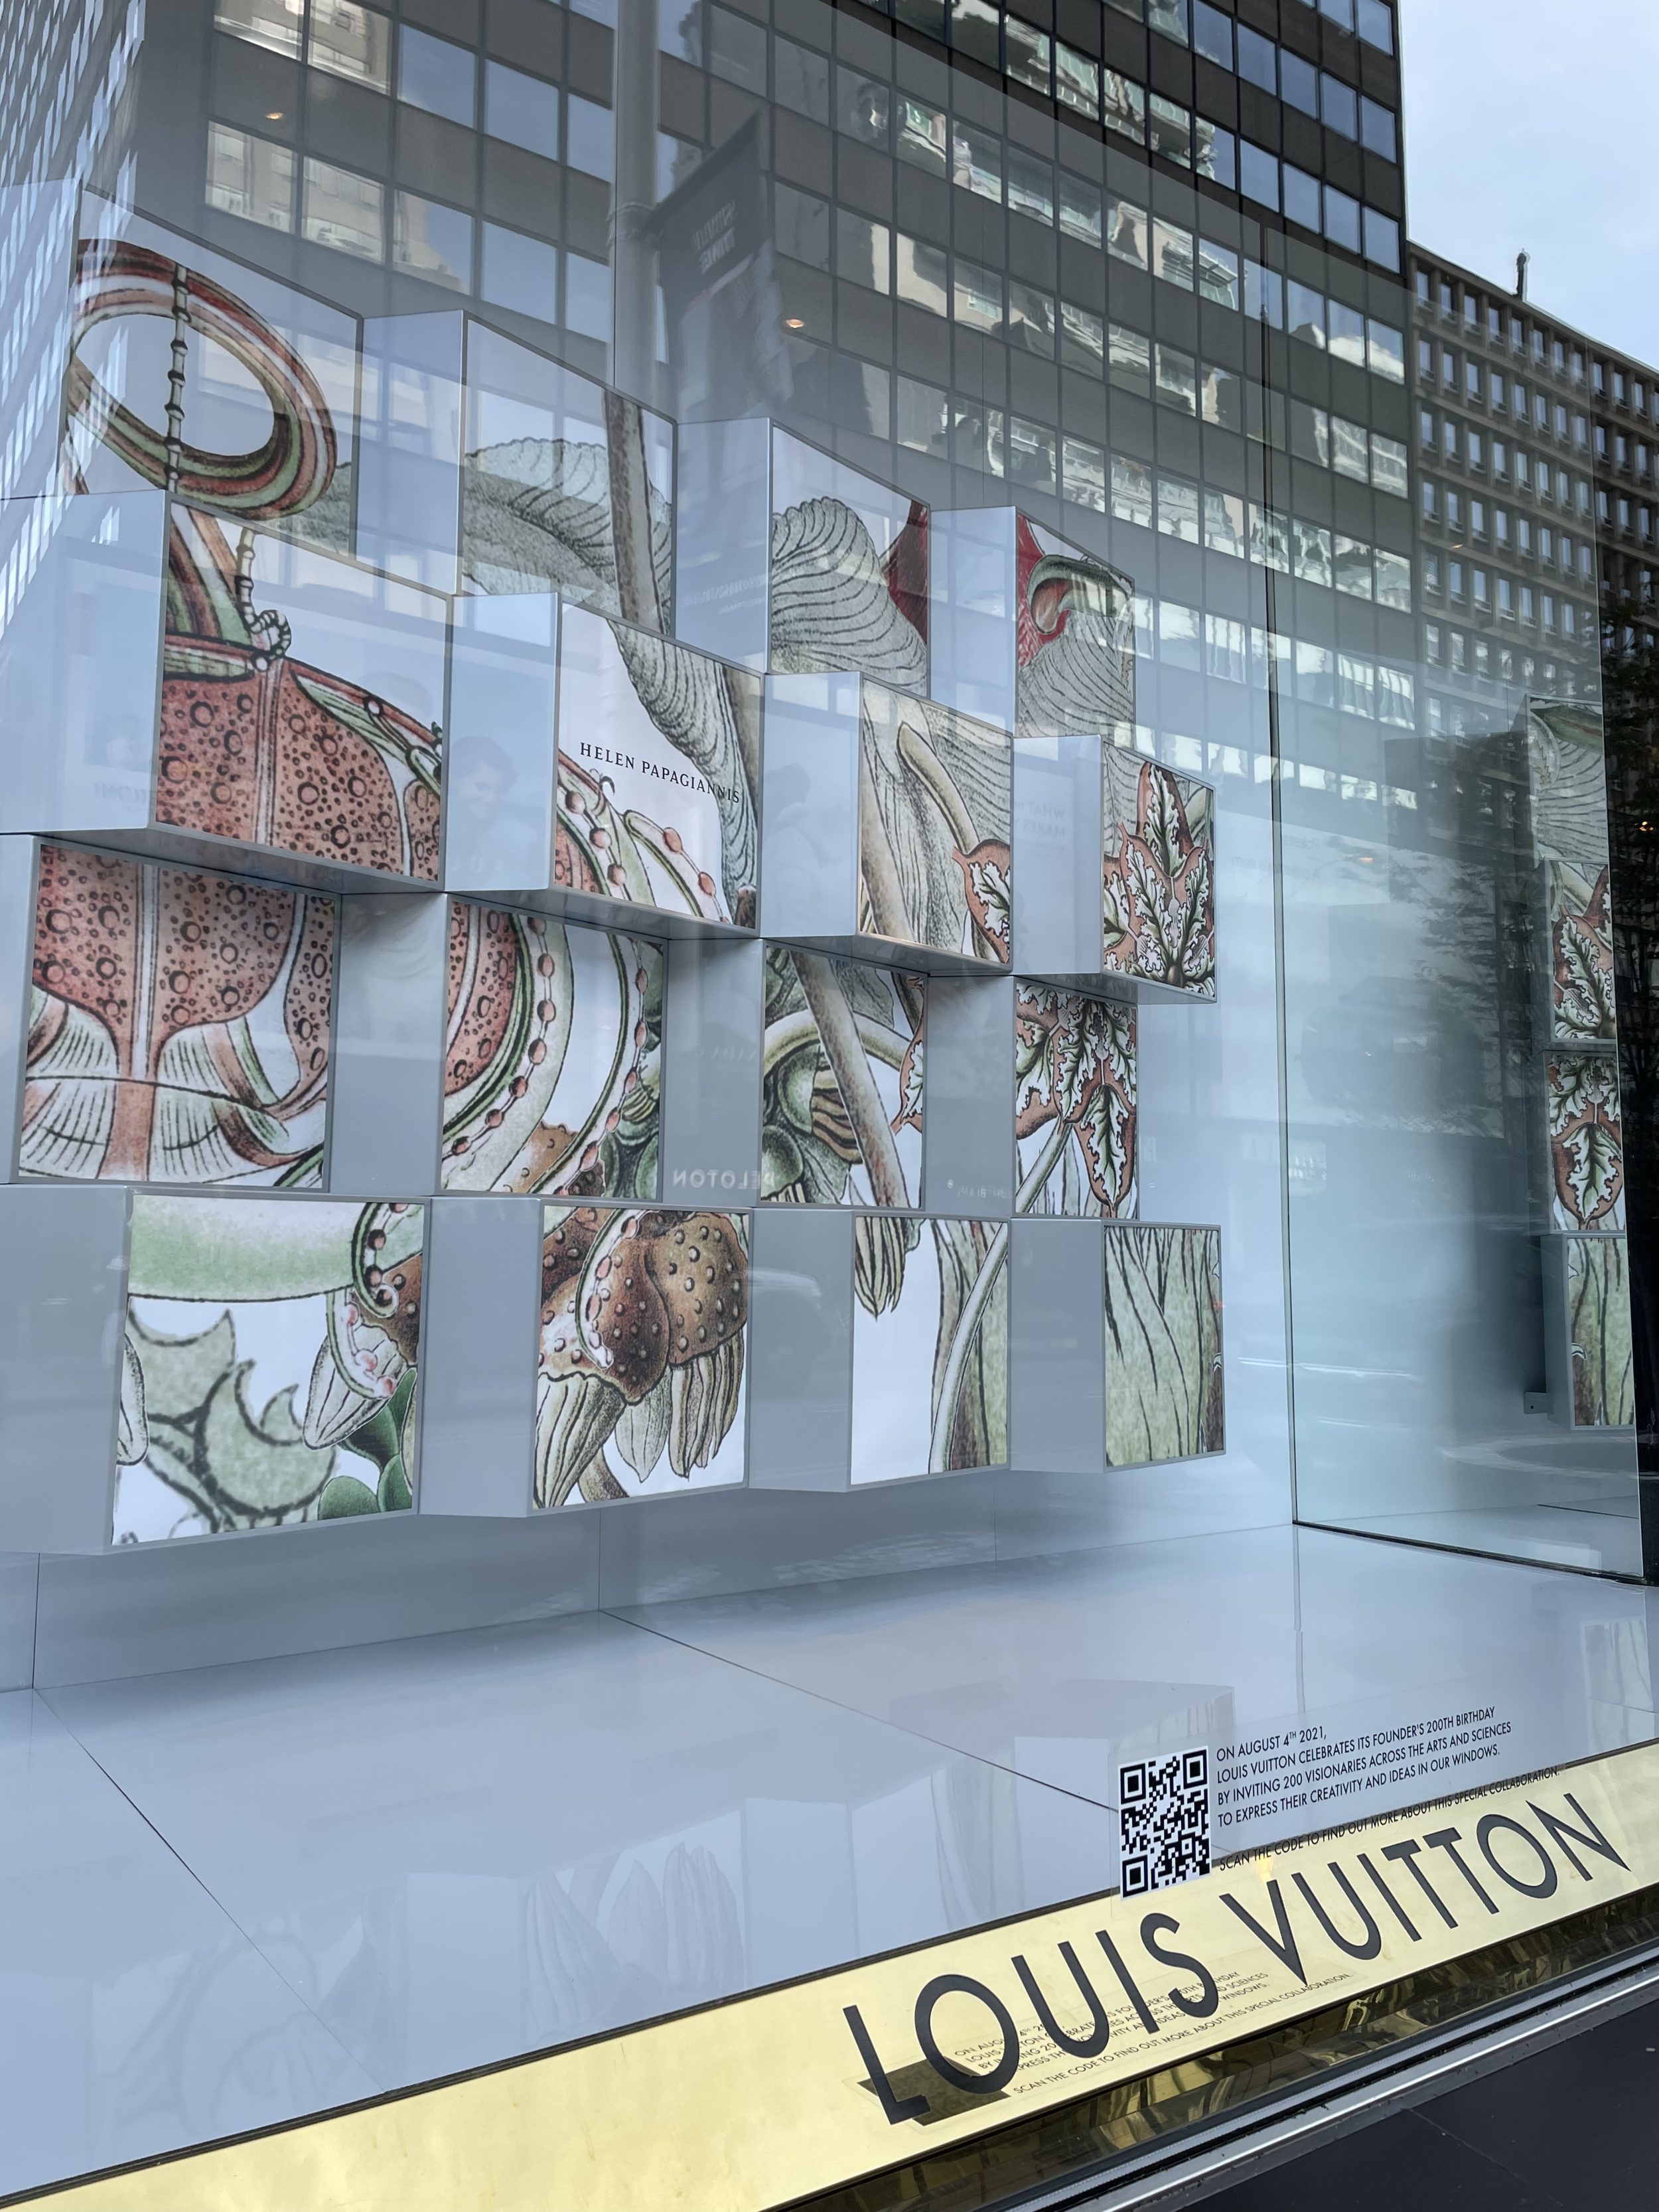 Louis Vuitton's Virtual London Pop-Up